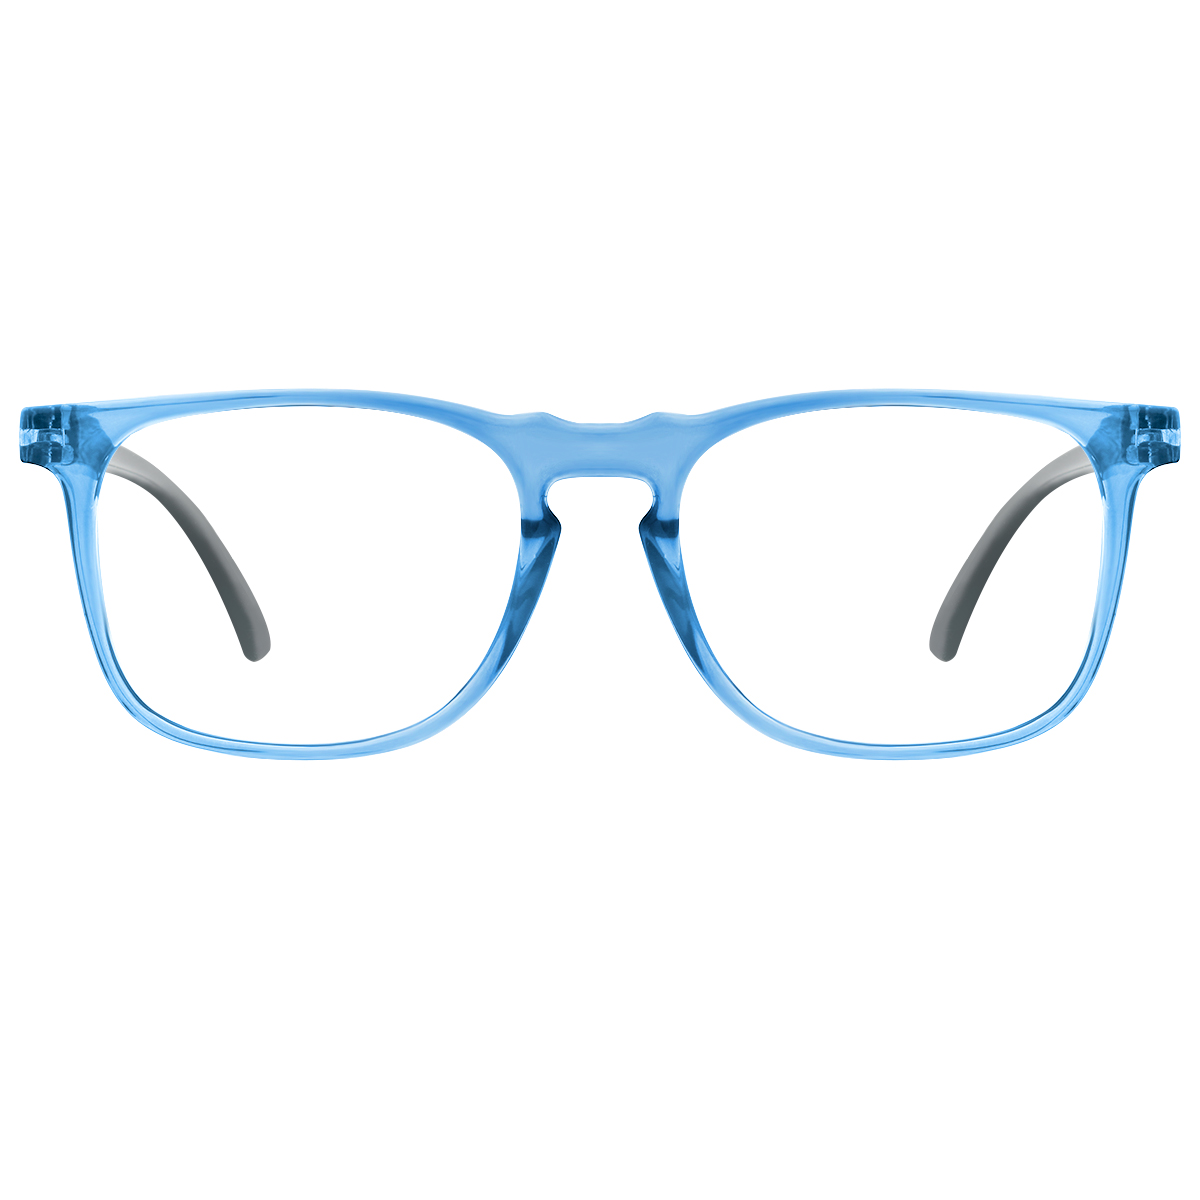 square reading-glasses #572 - blue